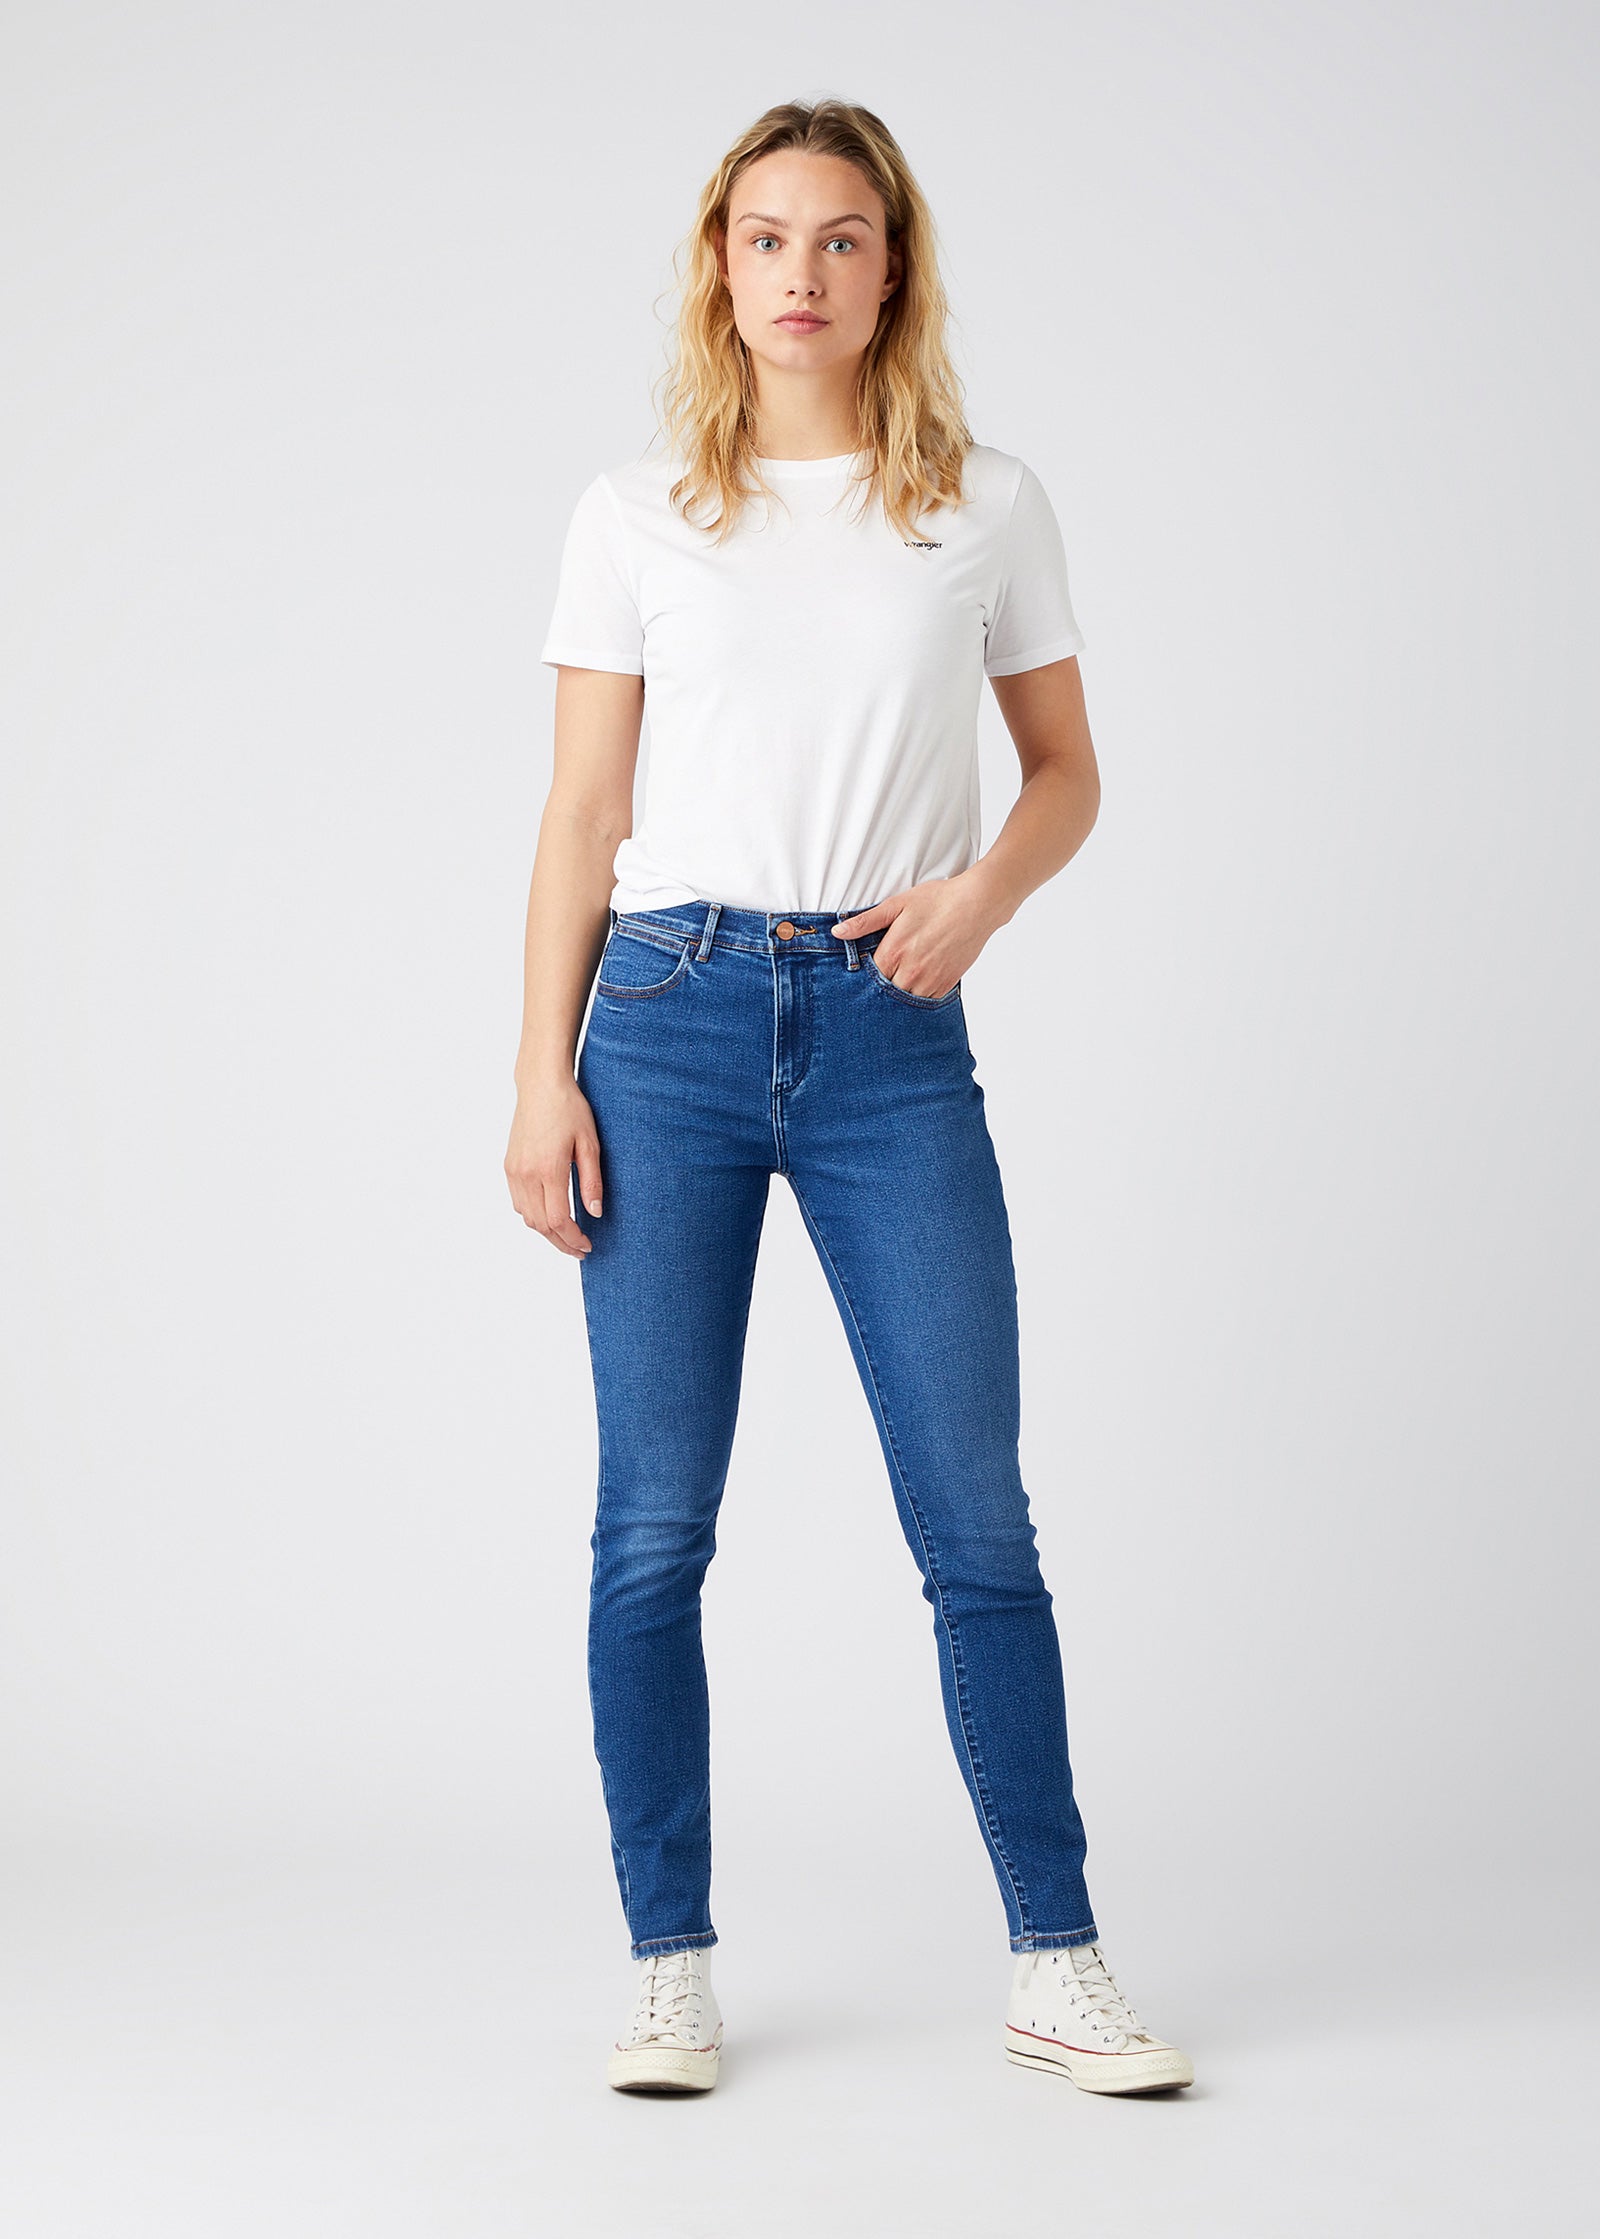 High Rise Skinny Jeans in Camellia Jeans Wrangler   